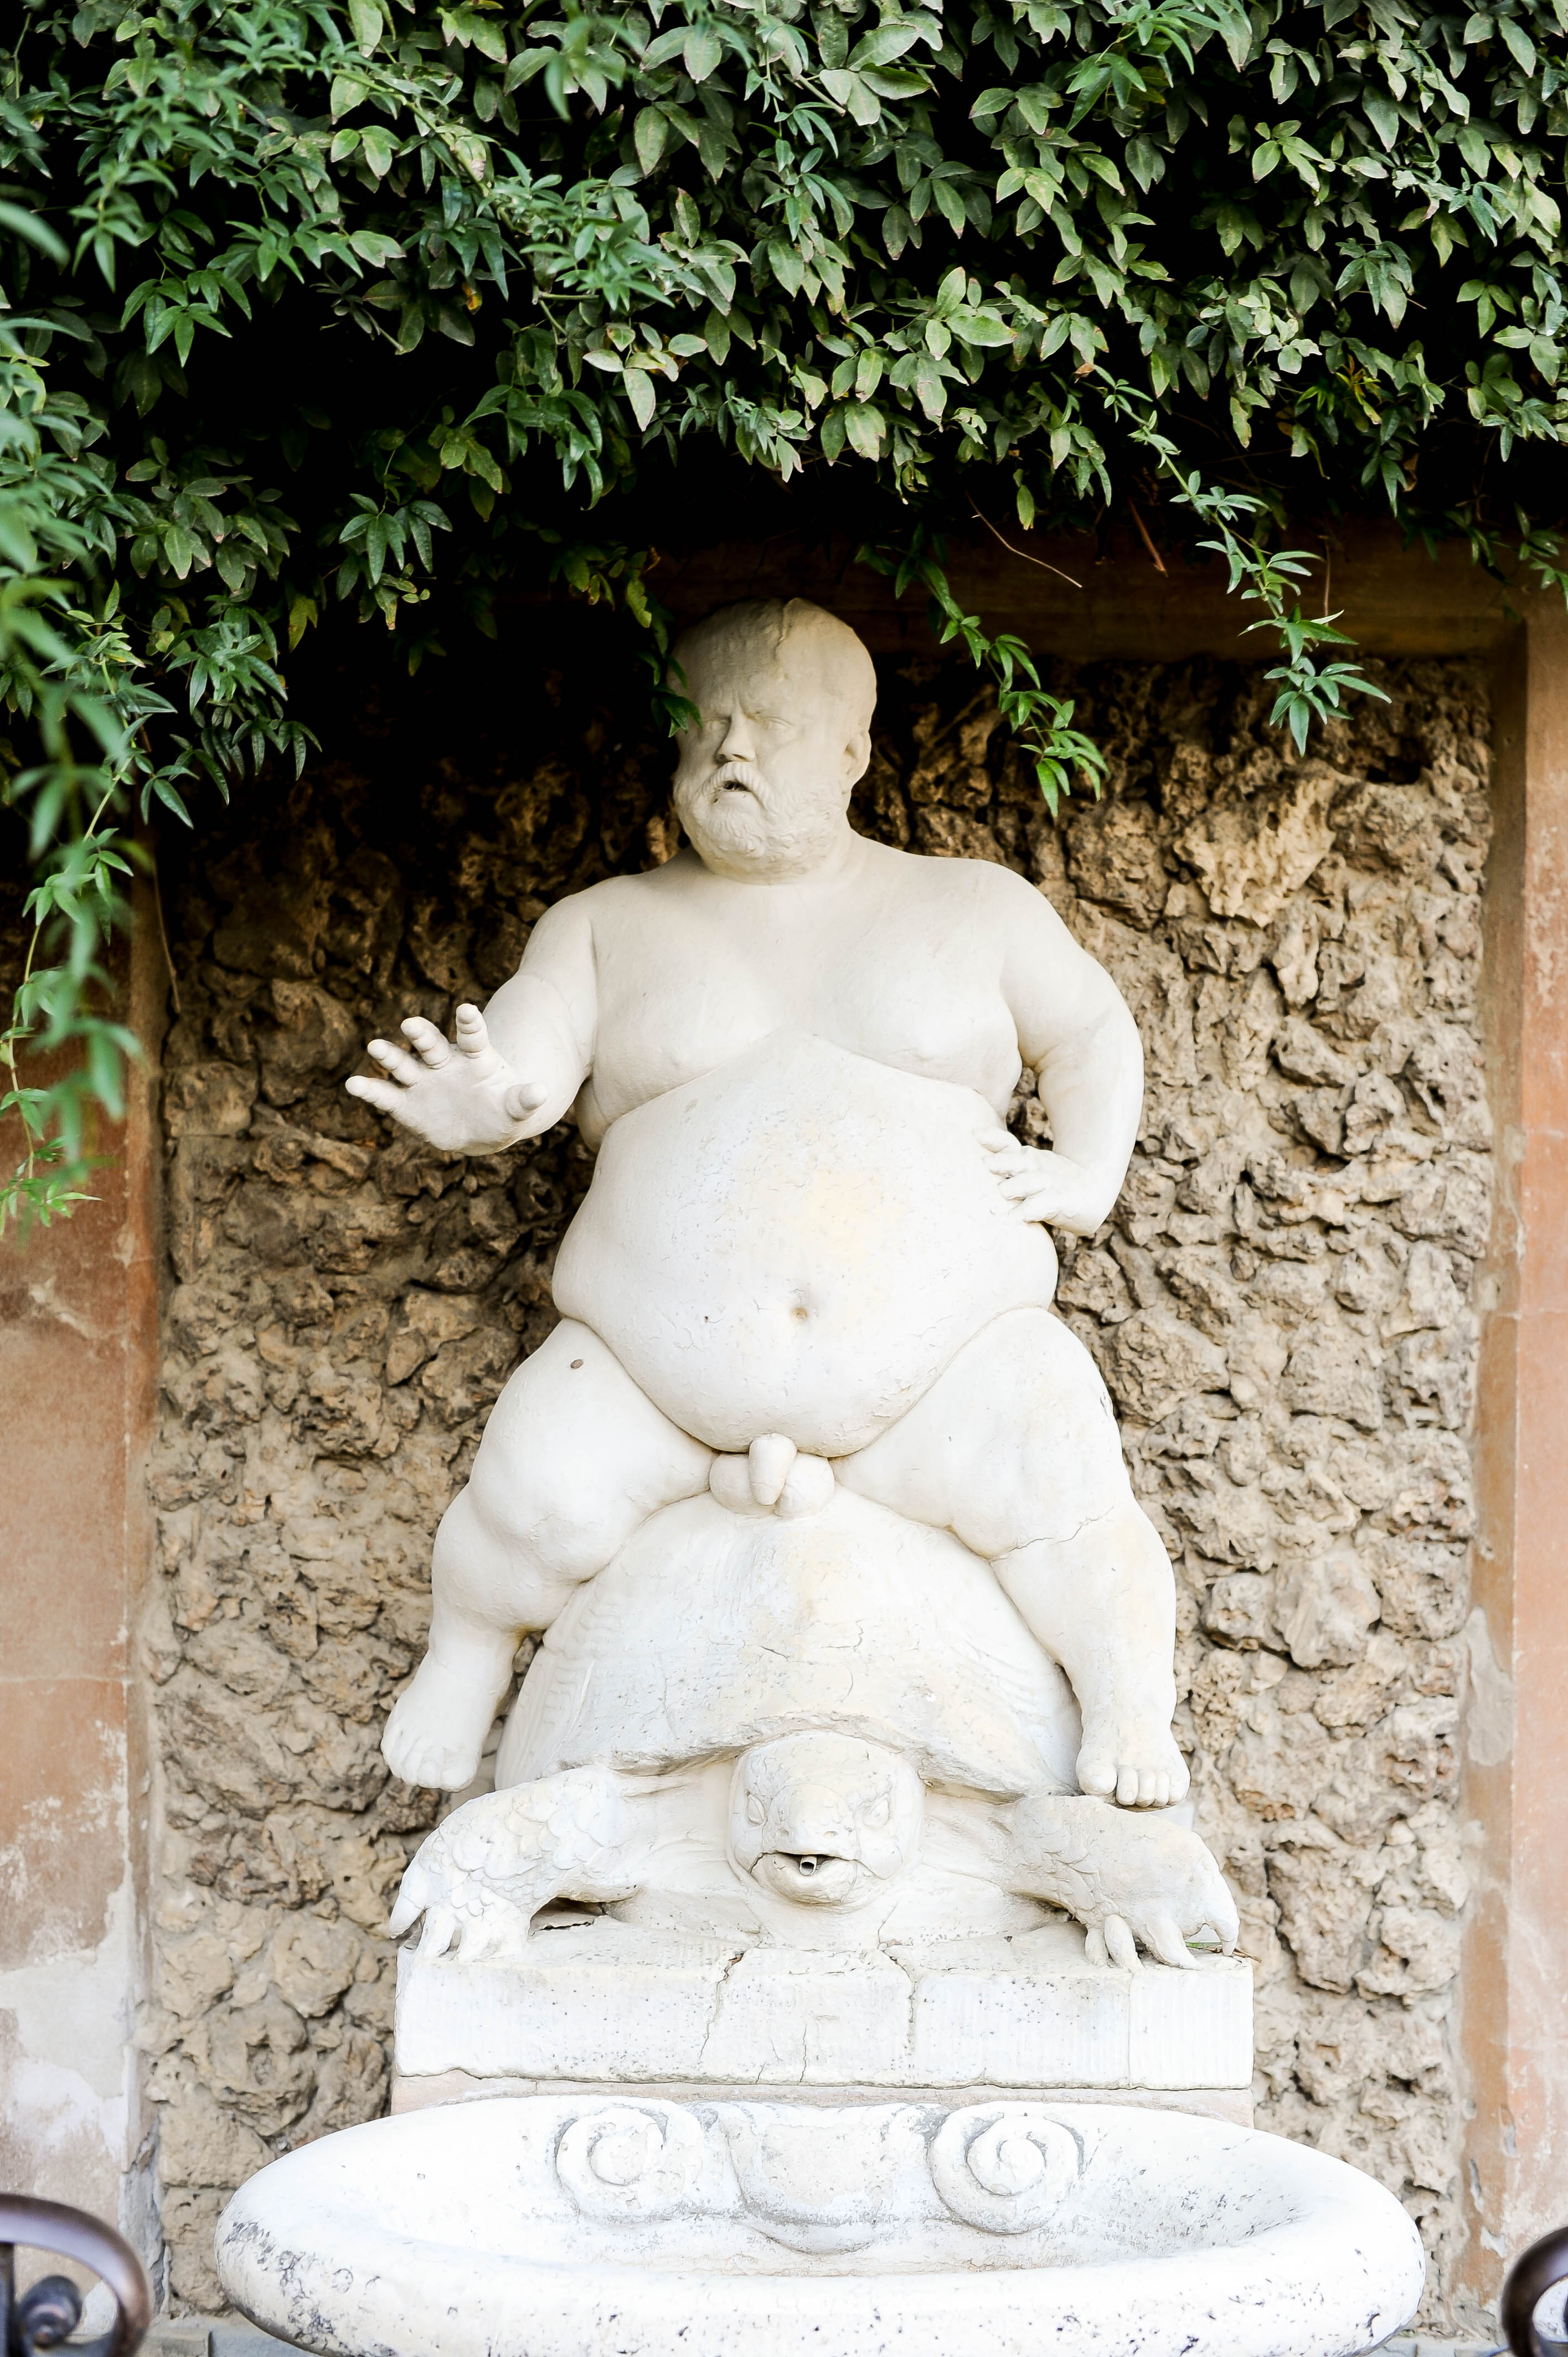 Naked Dwarf Boboli Gardens Florence